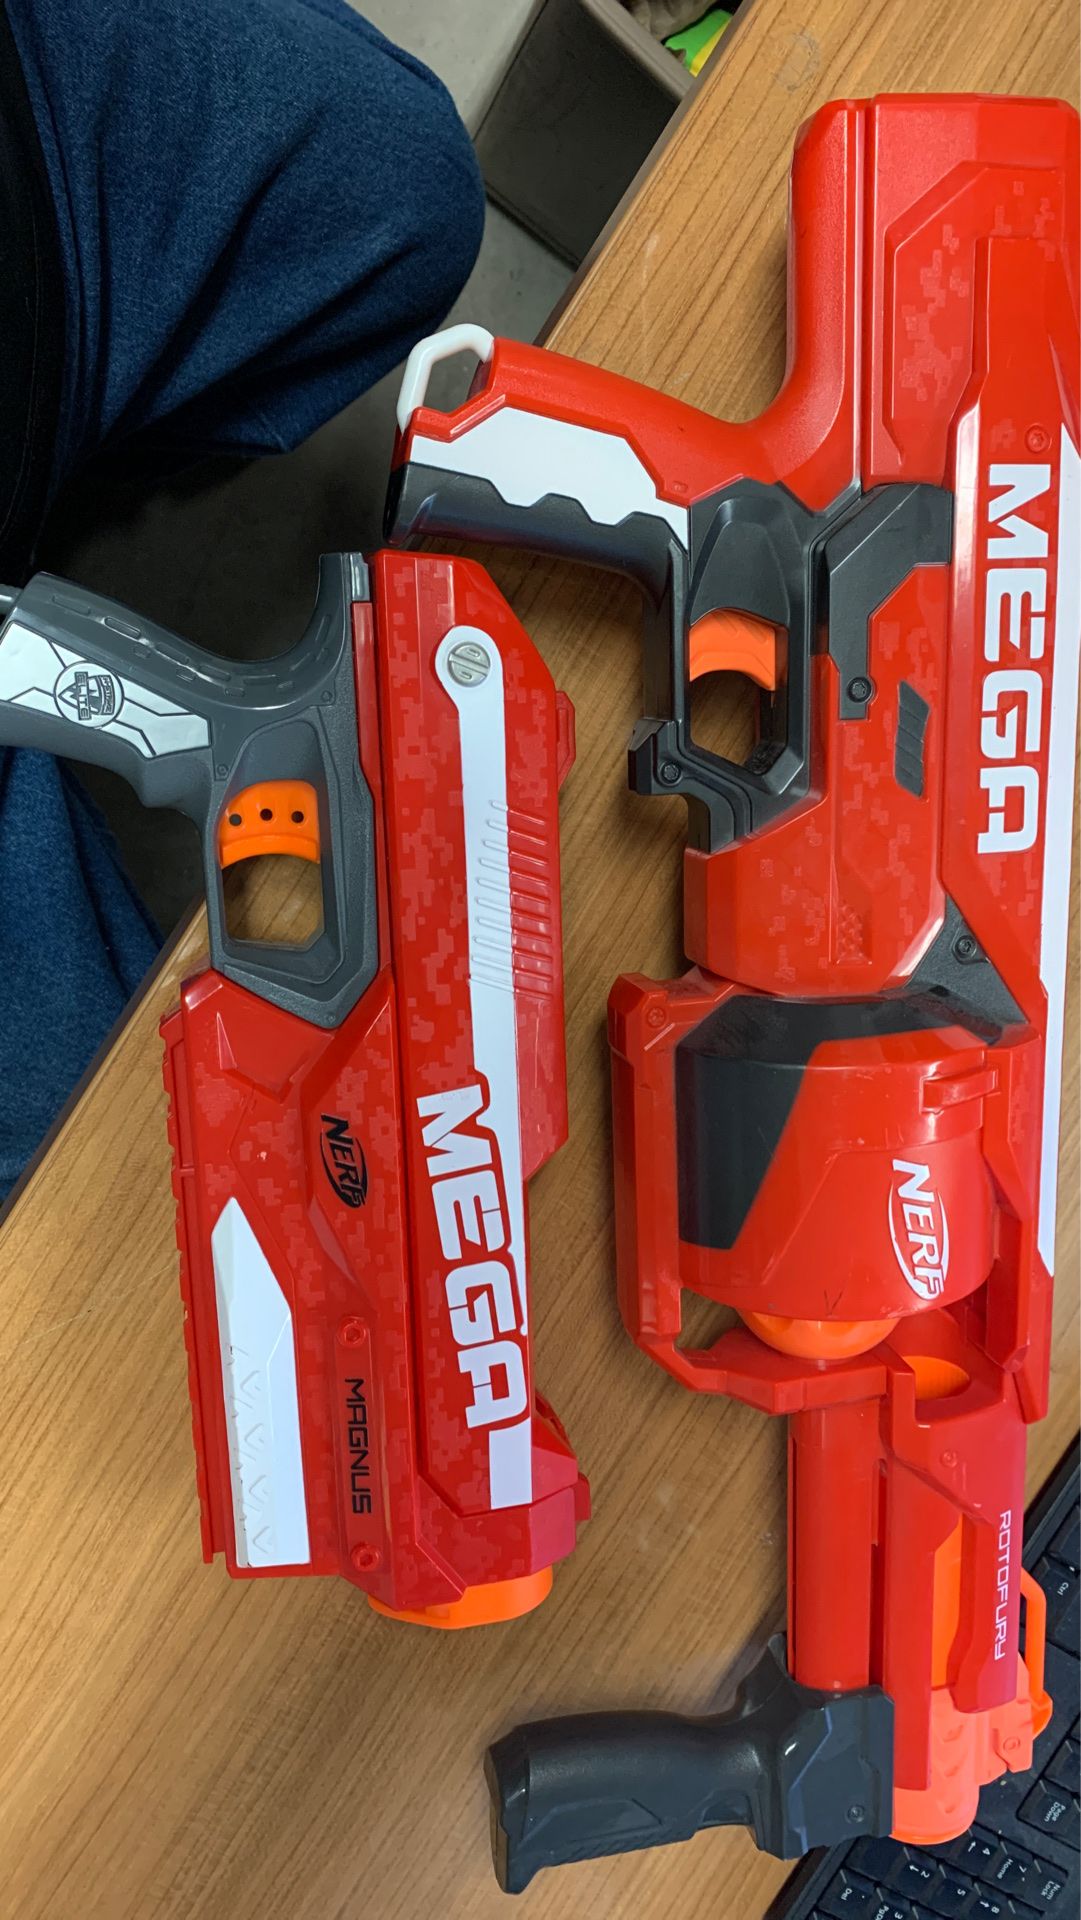 2 mega nerf guns